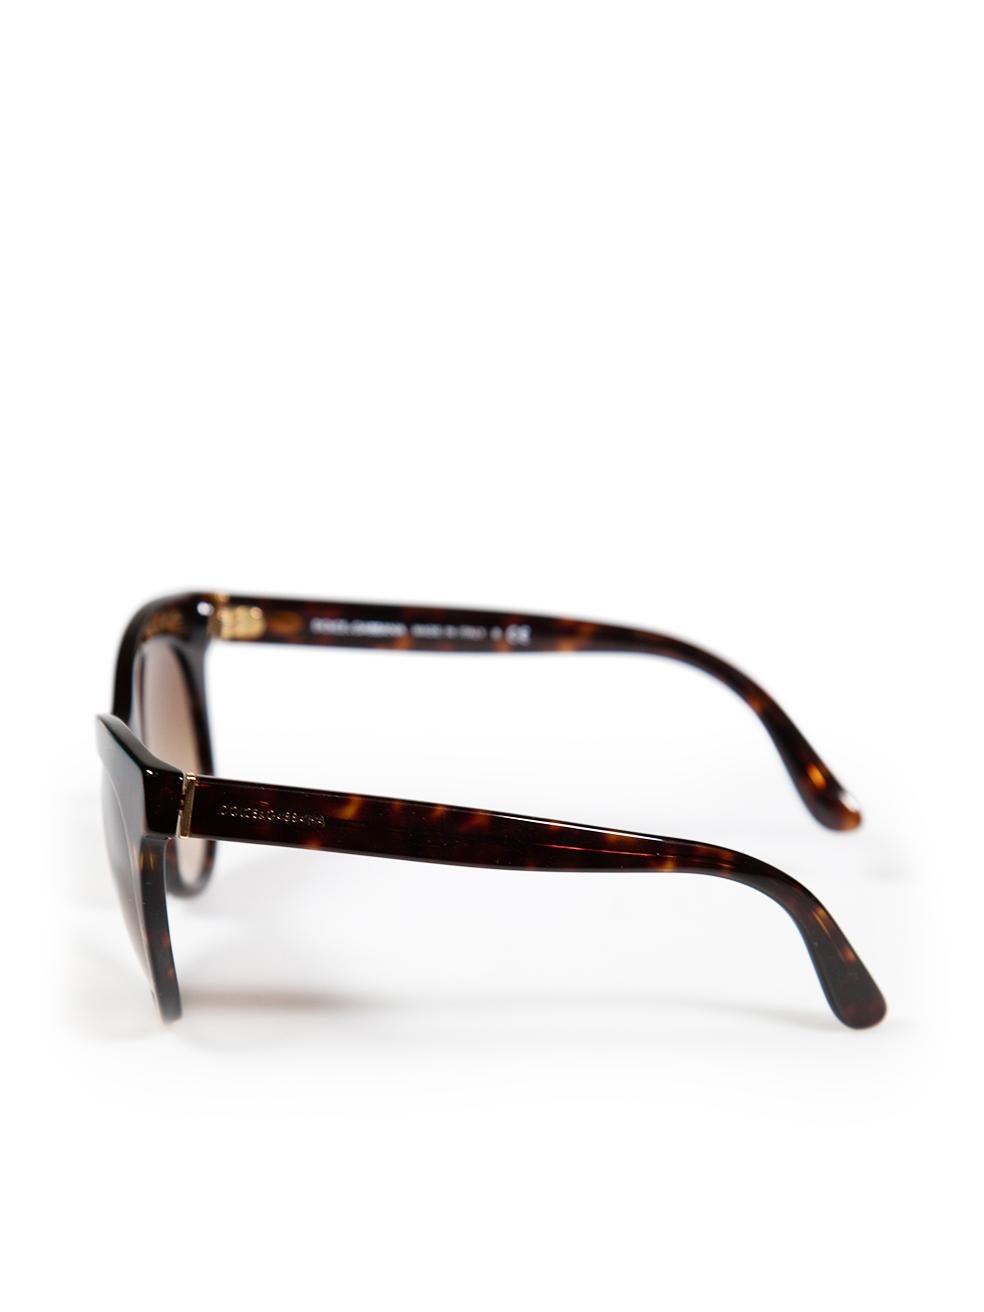 Women's Dolce & Gabbana Brown Gradient Tortoiseshell Sunglasses For Sale